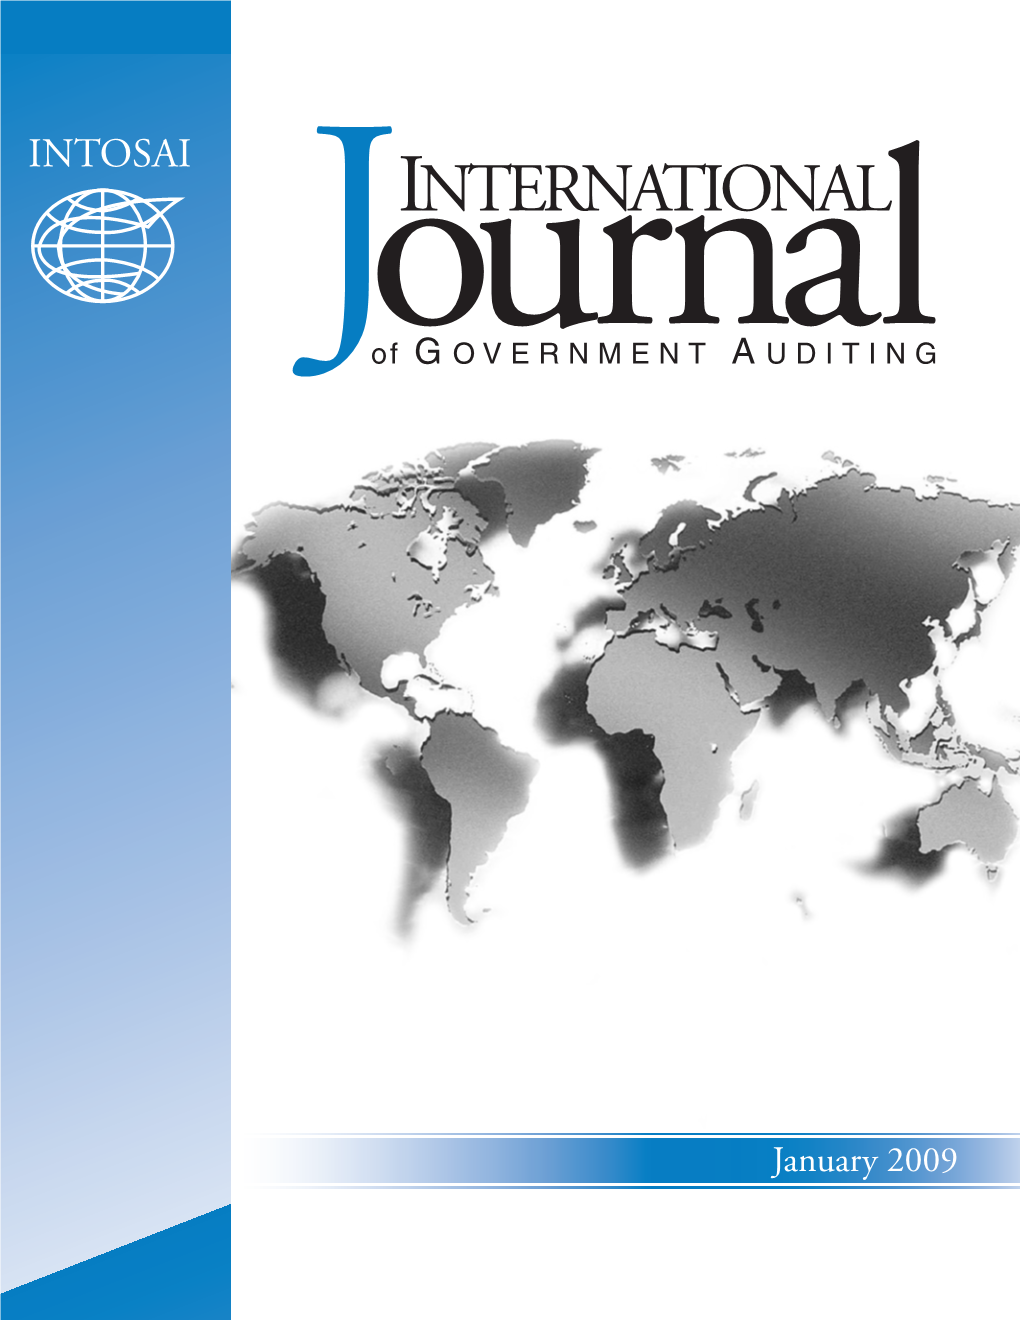 Winter of 2008–2009 Regarding Accounting Standards